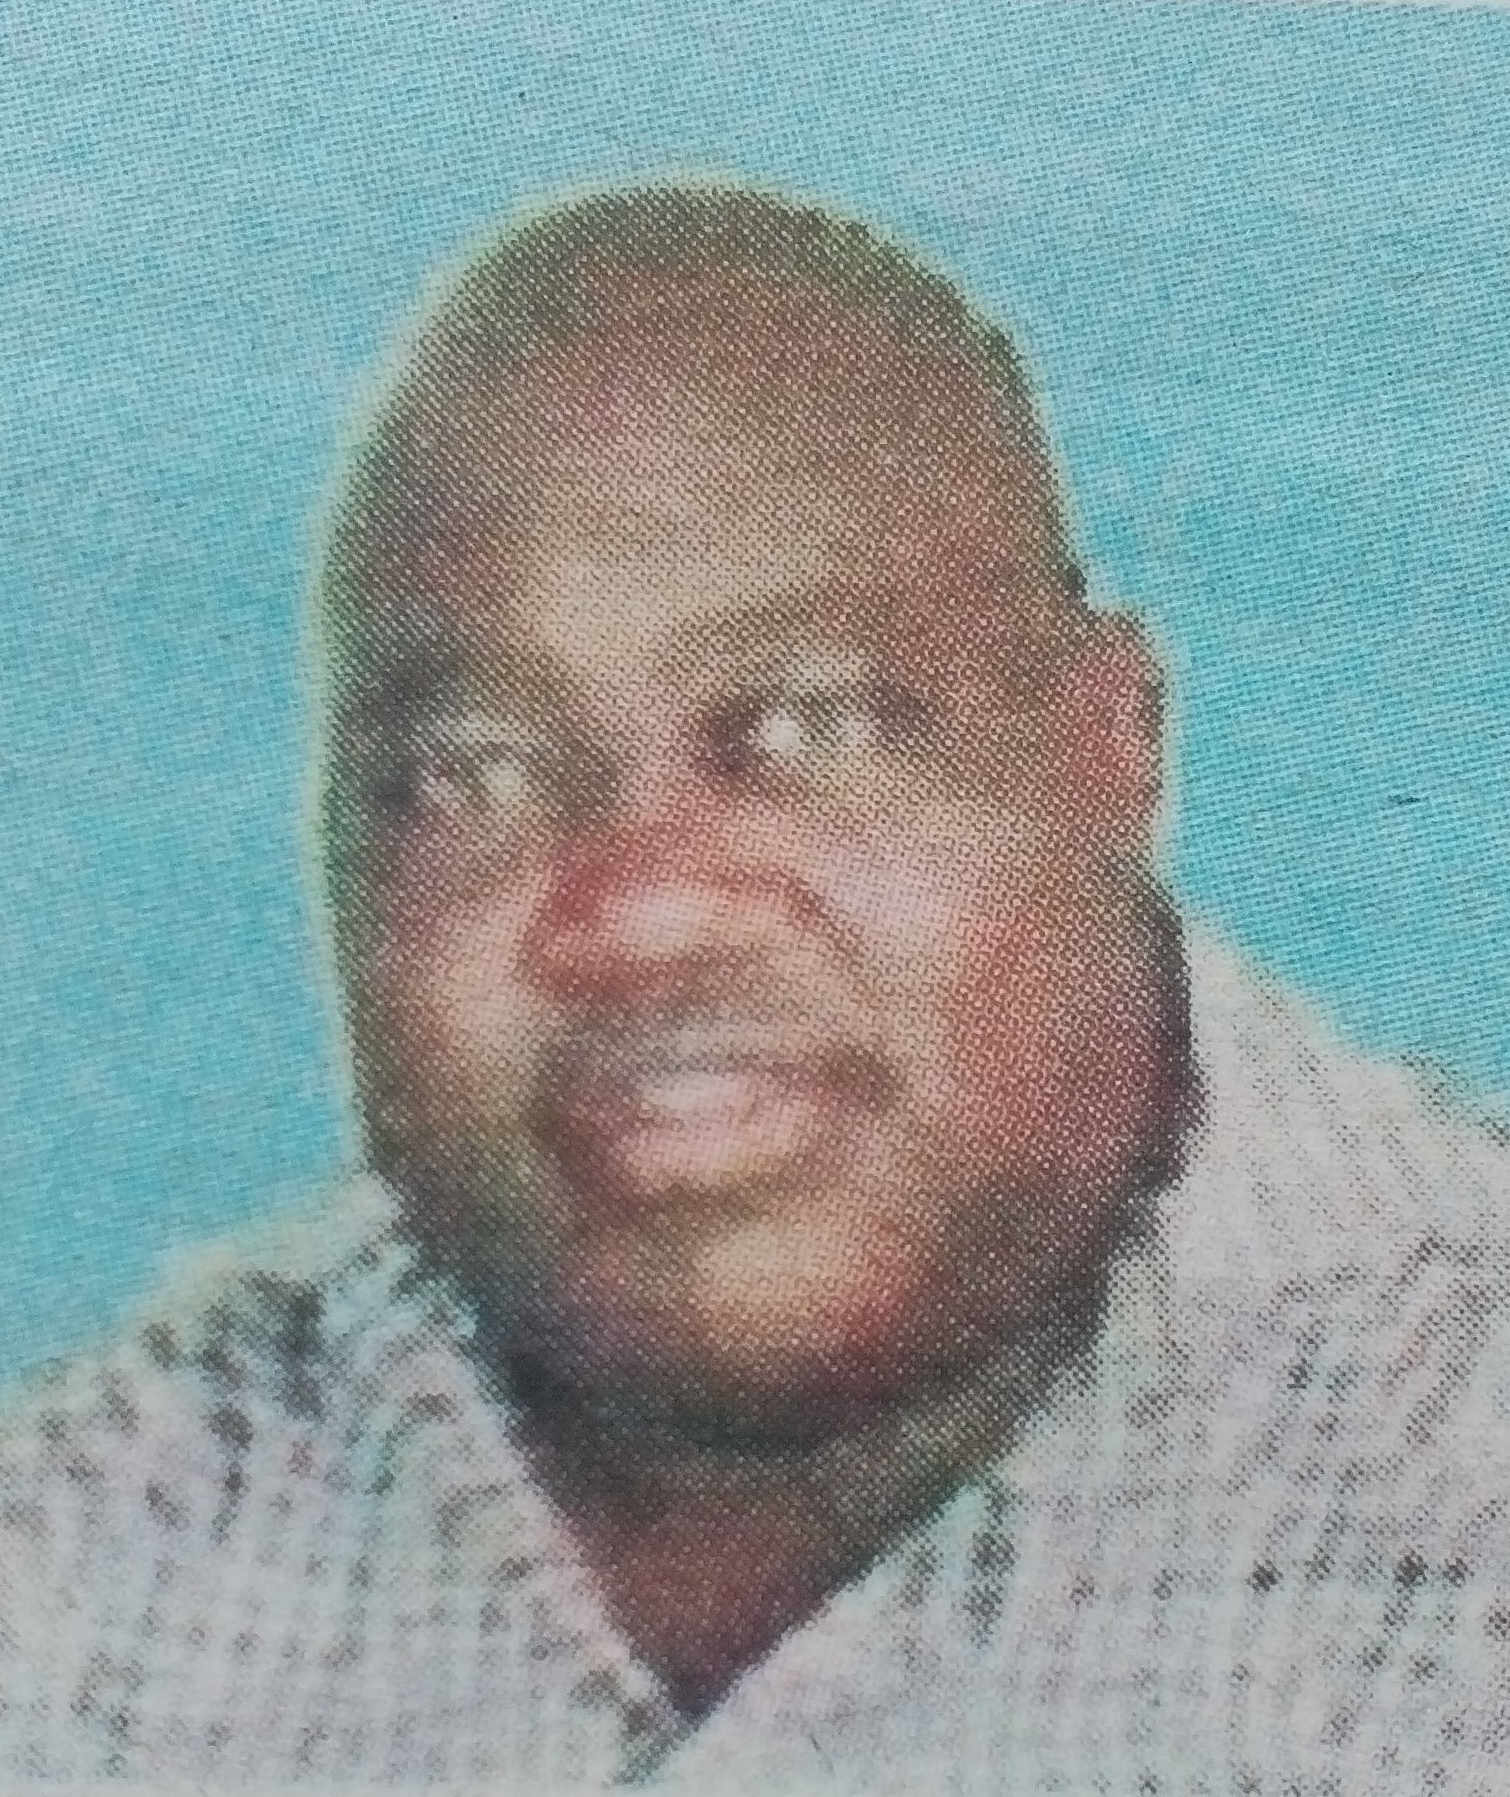 Obituary Image of Ronald Bosire Gichana